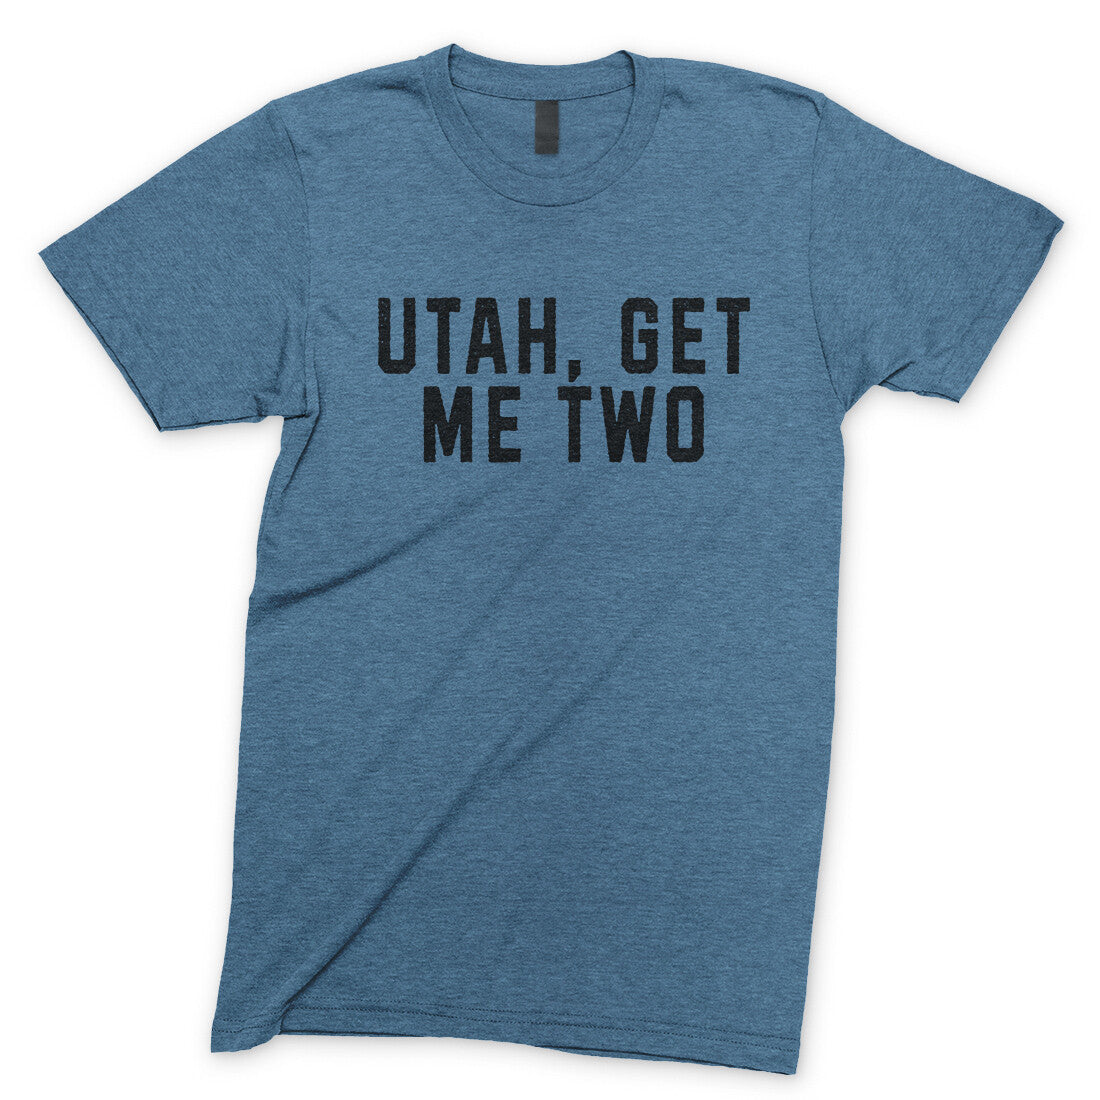 Utah Get me Two in Heather Indigo Color